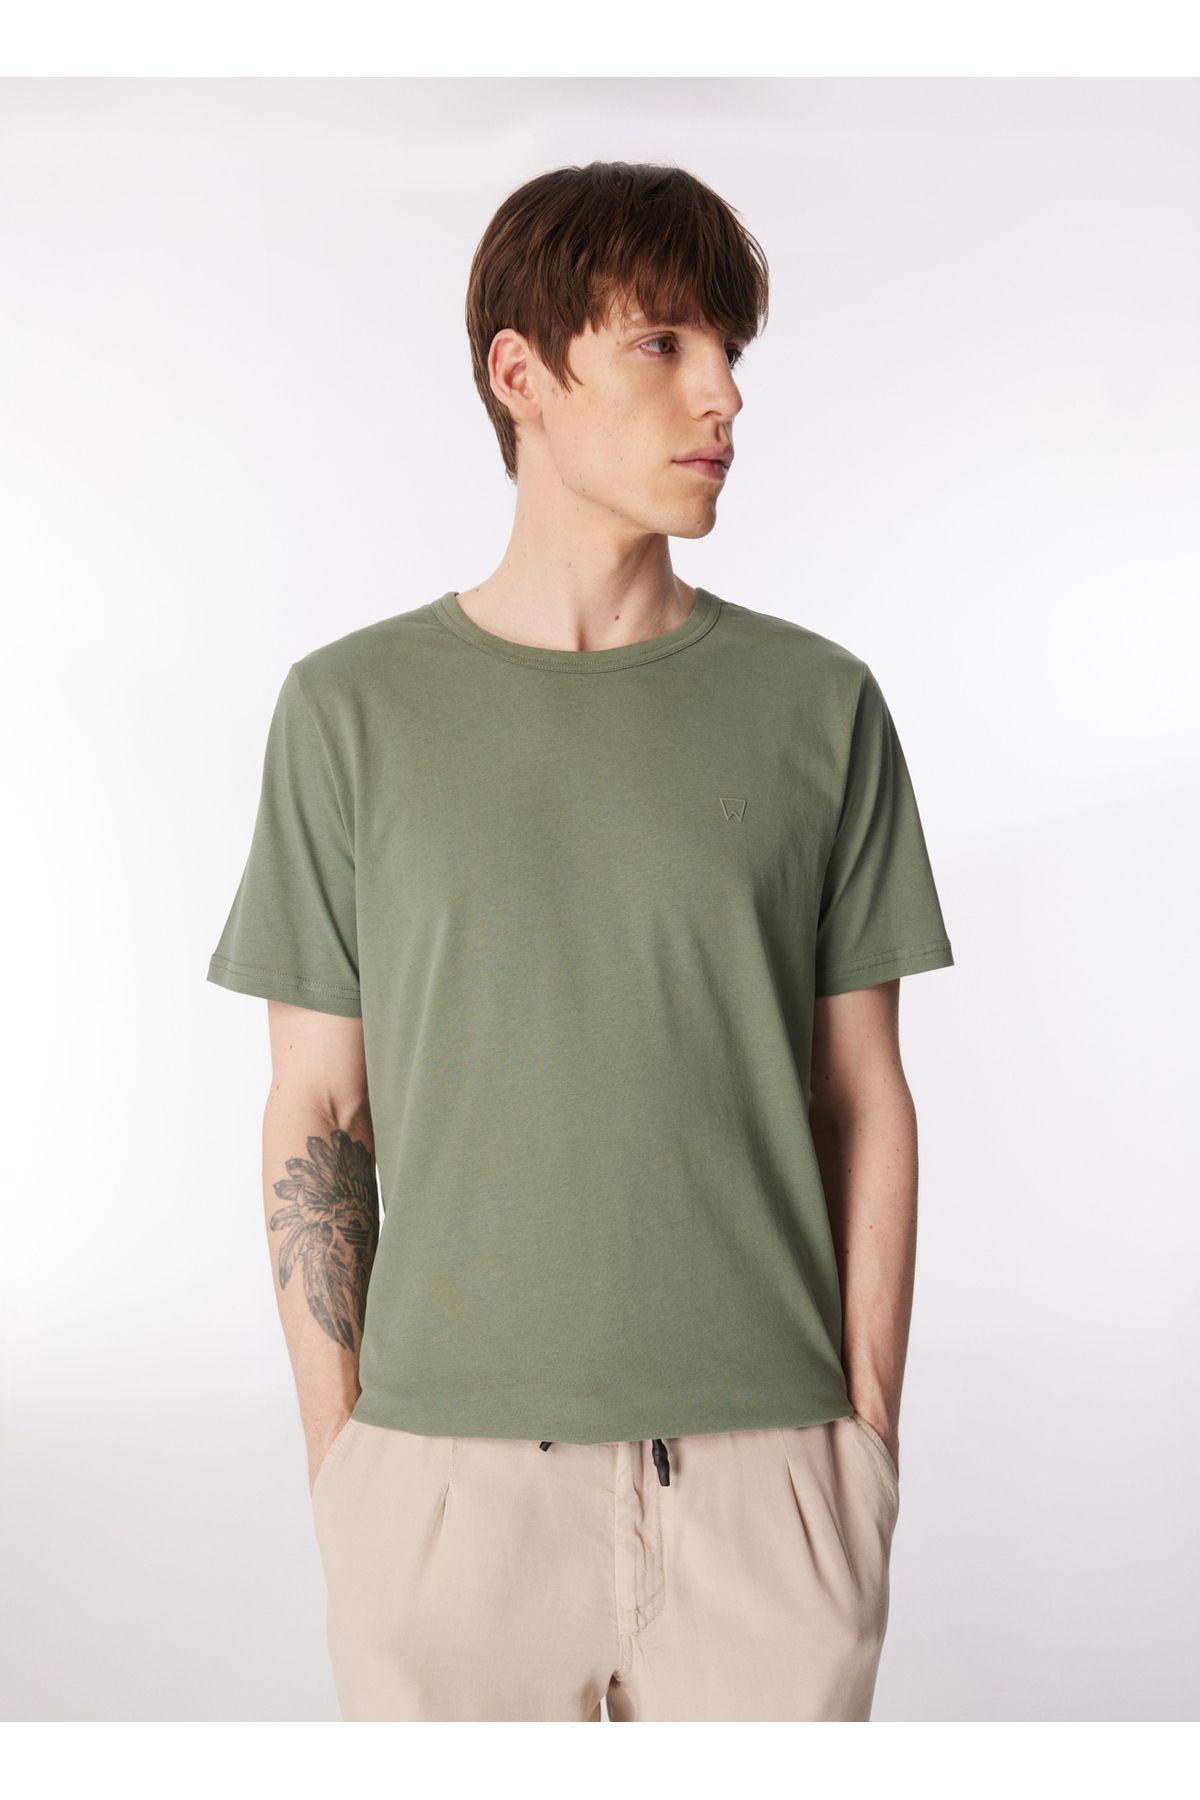 Wrangler تی شرت مردان سبز رنگ یقه دوچرخه W241575275